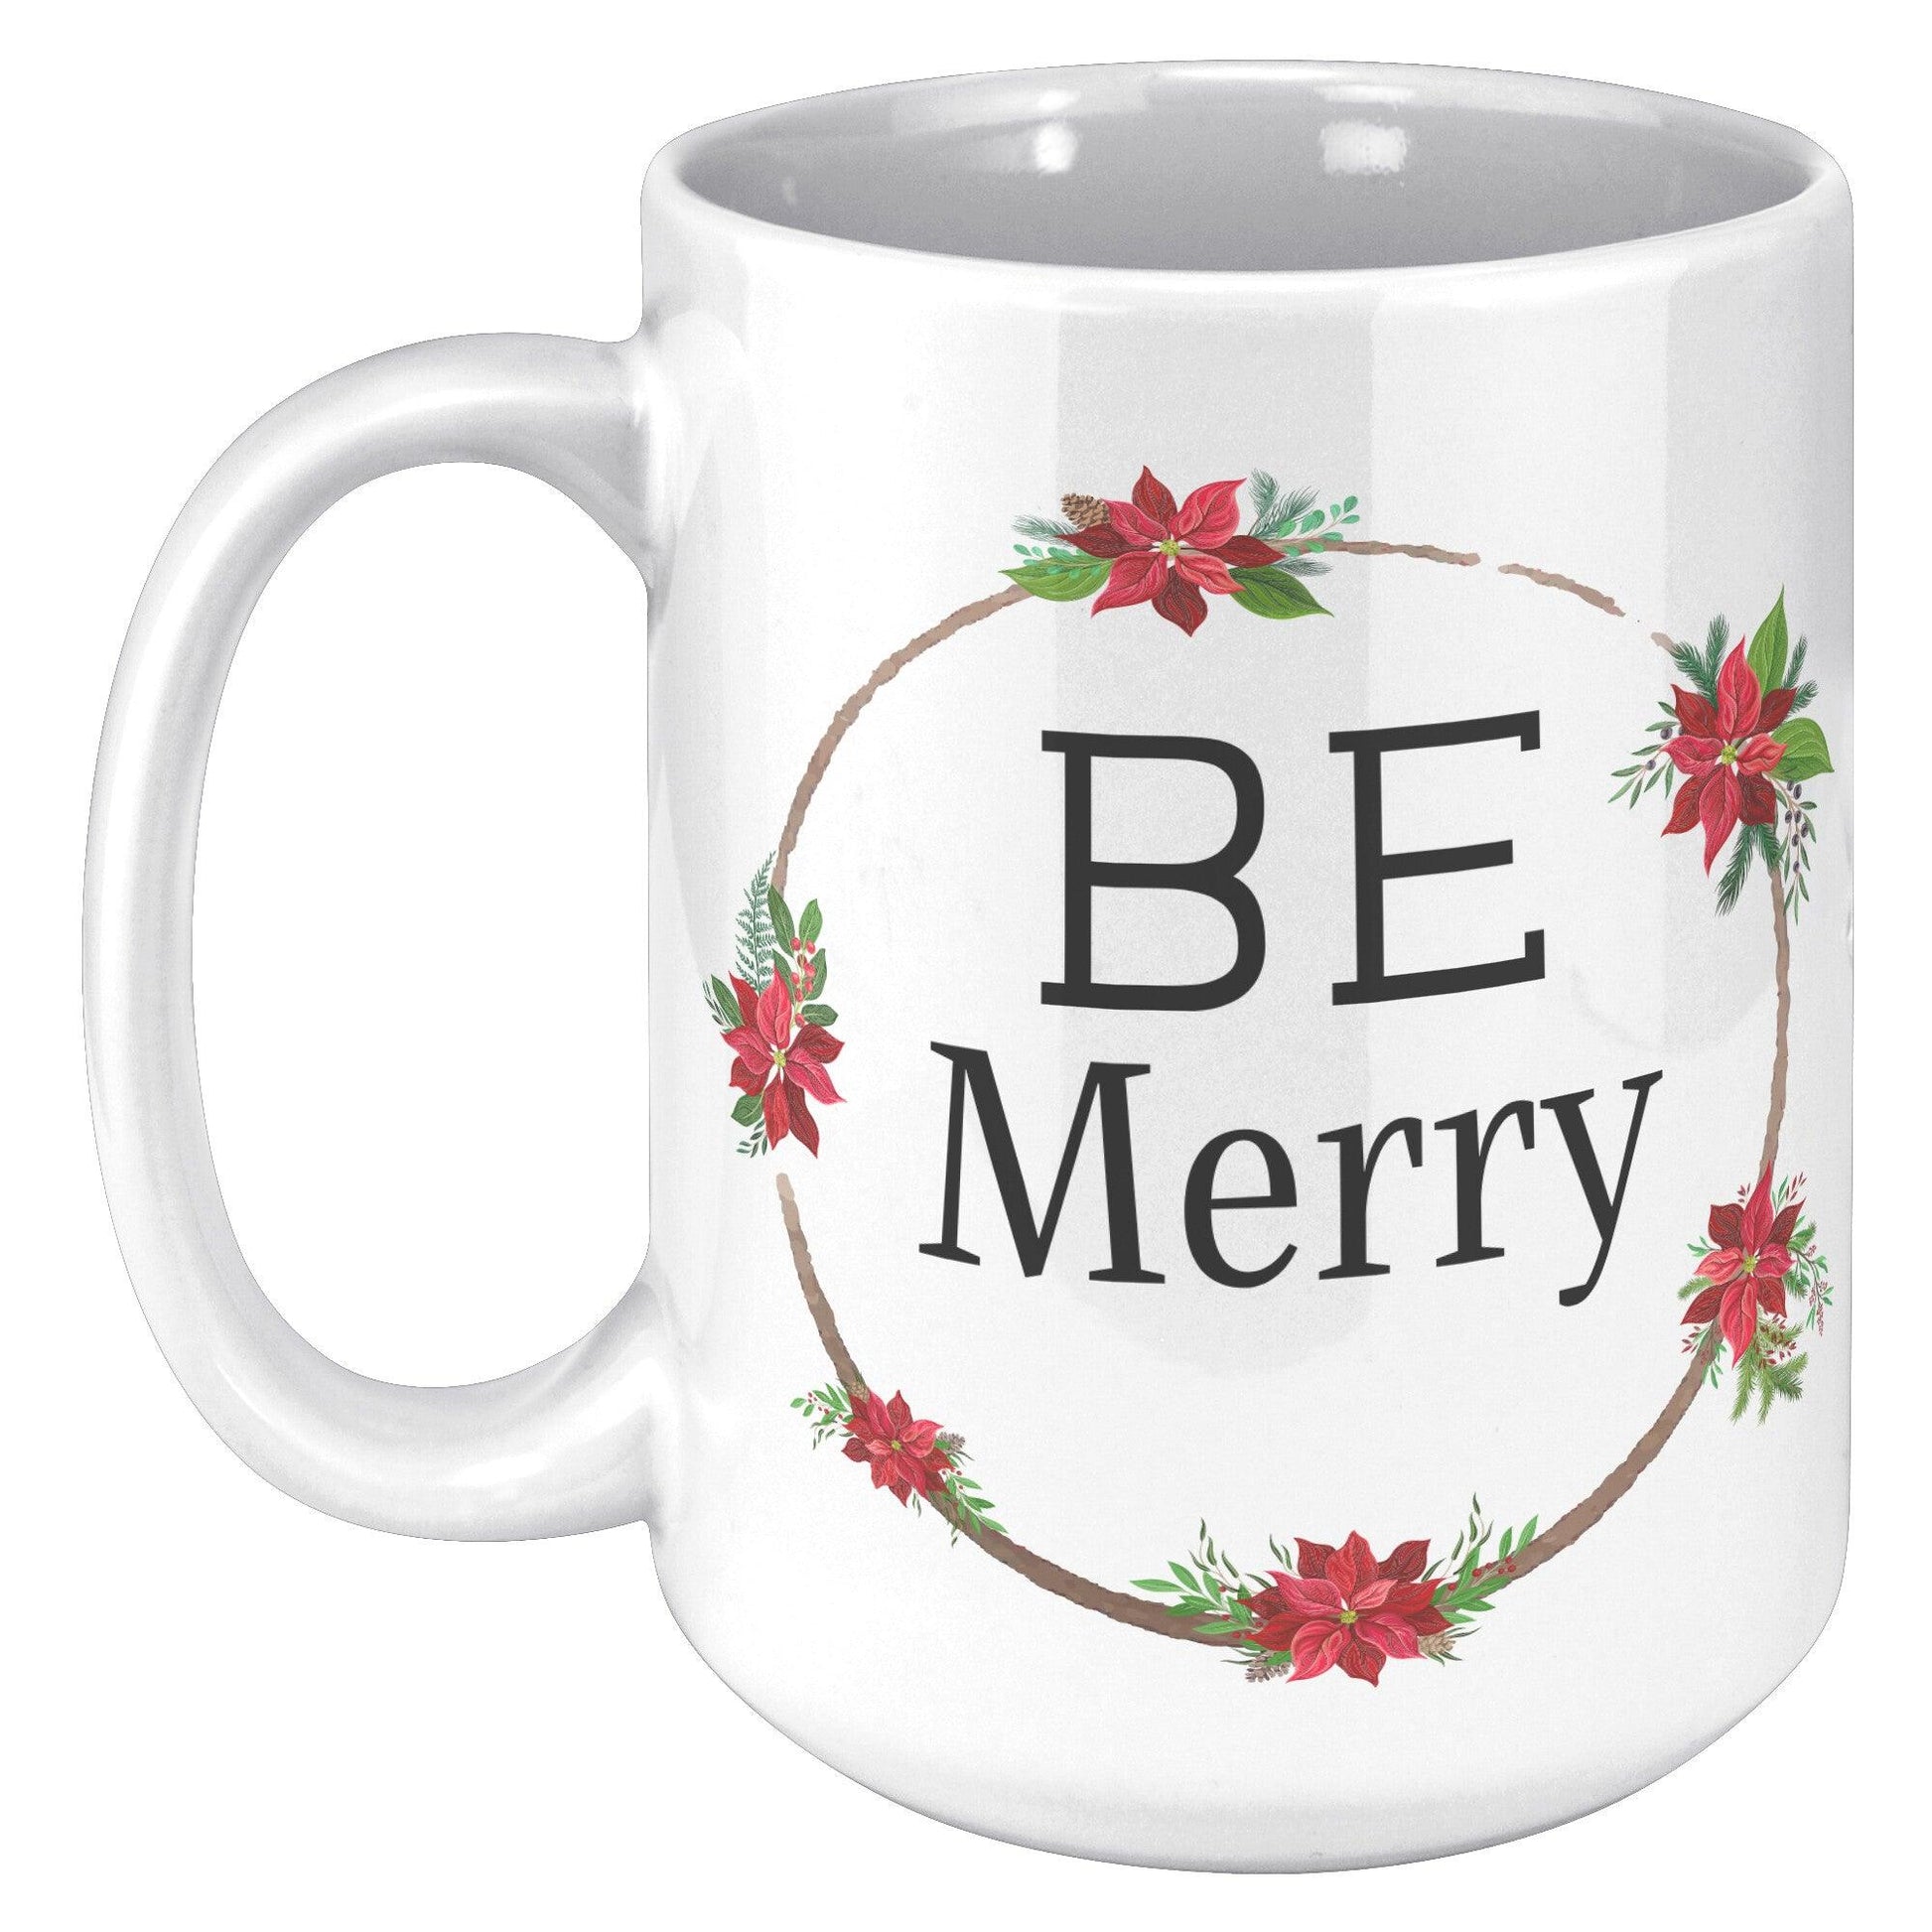 Be Merry White Mug - TheGivenGet